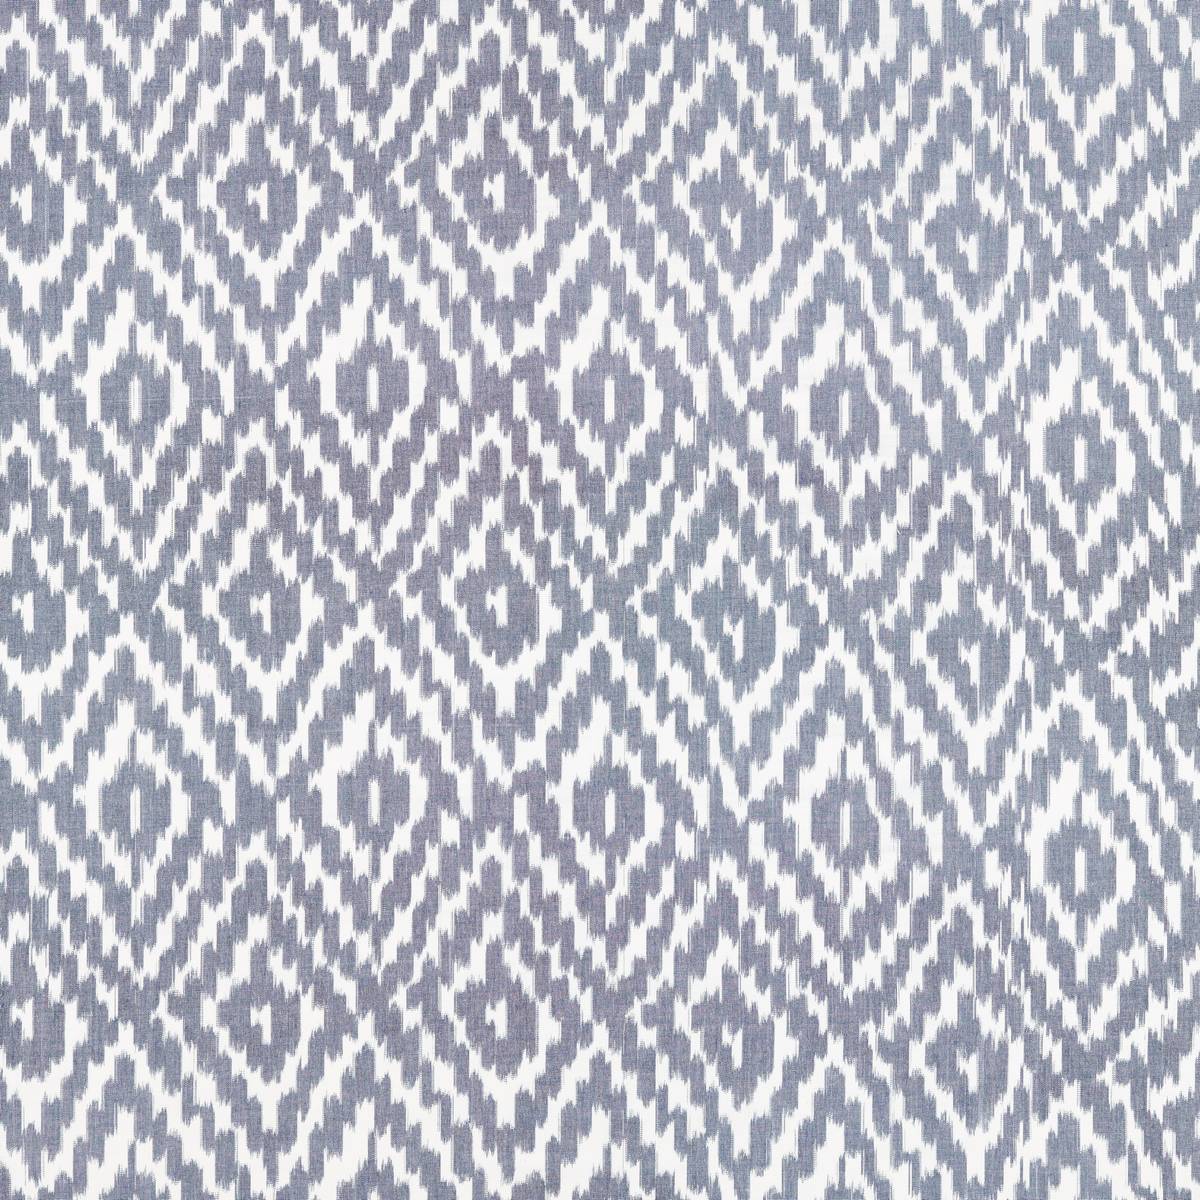 Uteki Denim Fabric by Scion